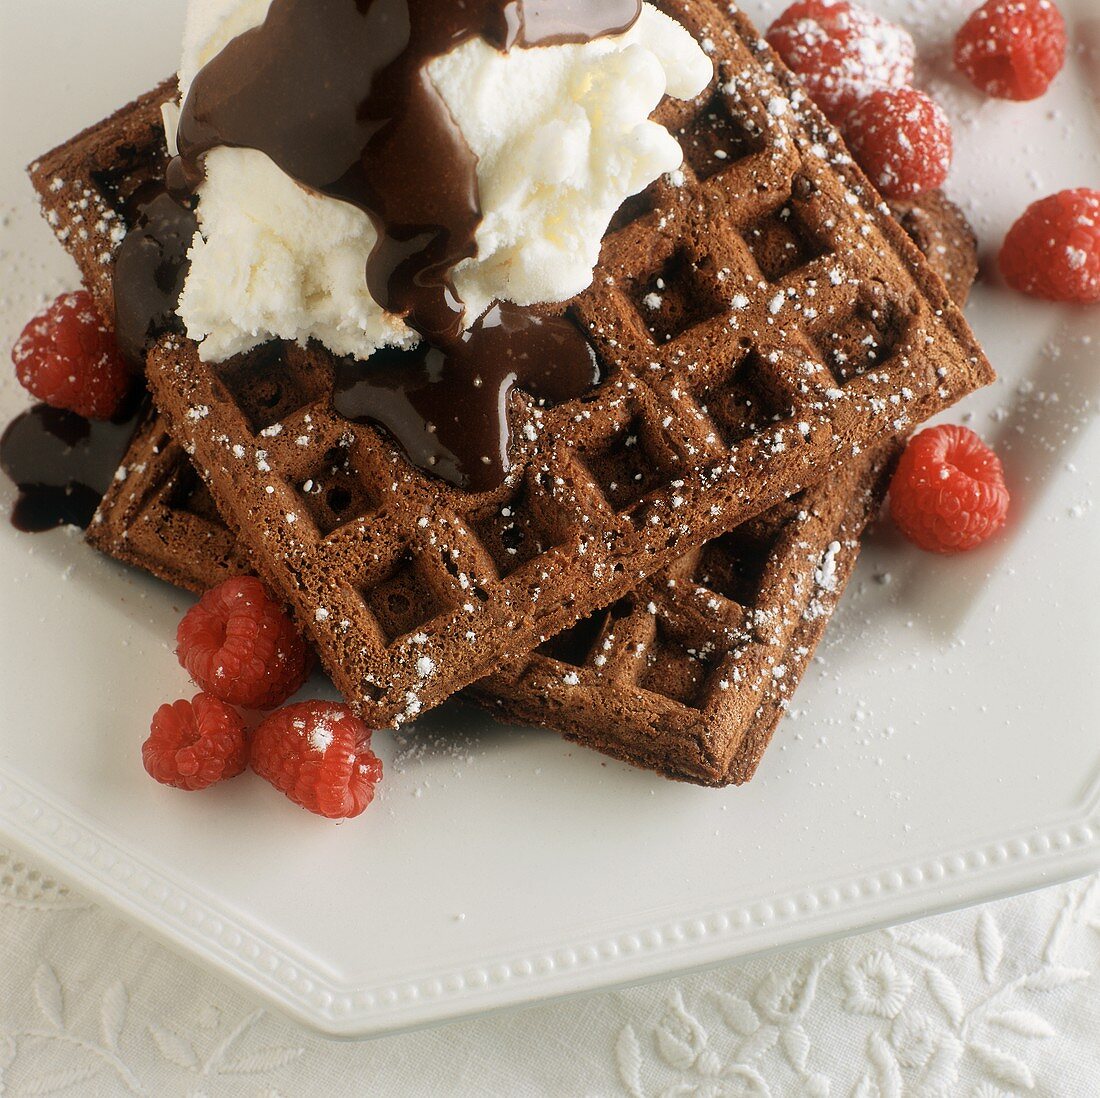 Chocolate Waffles with Raspberries, Ice Cream and Chocolate Sauce